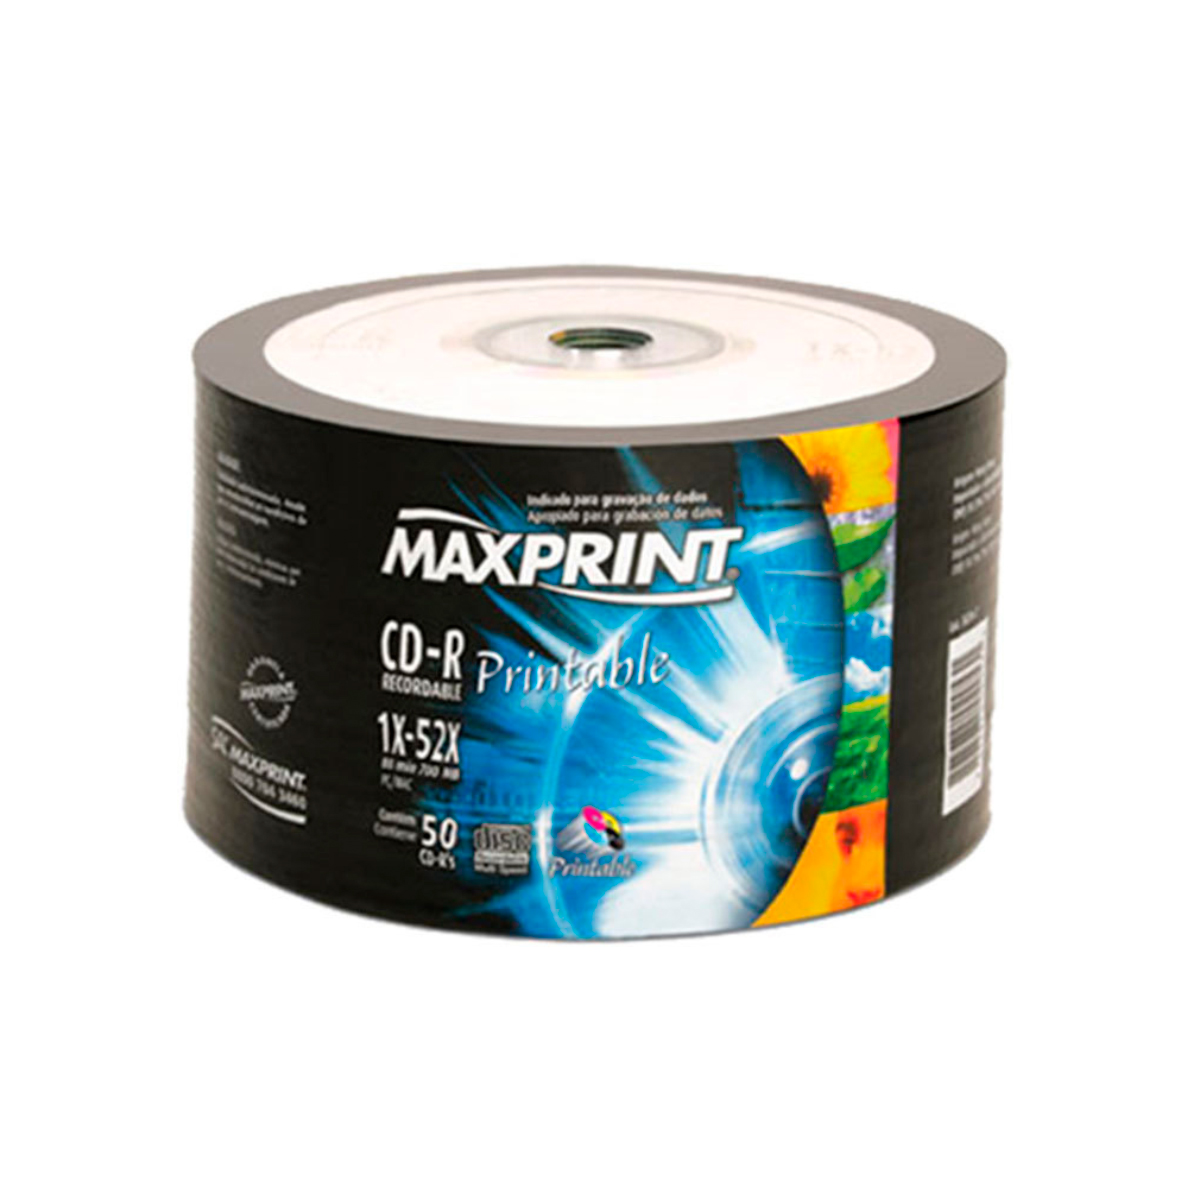 CD-R 700MB 52x - Printable - Tubo com 50 unidades - Maxprint 50605-1